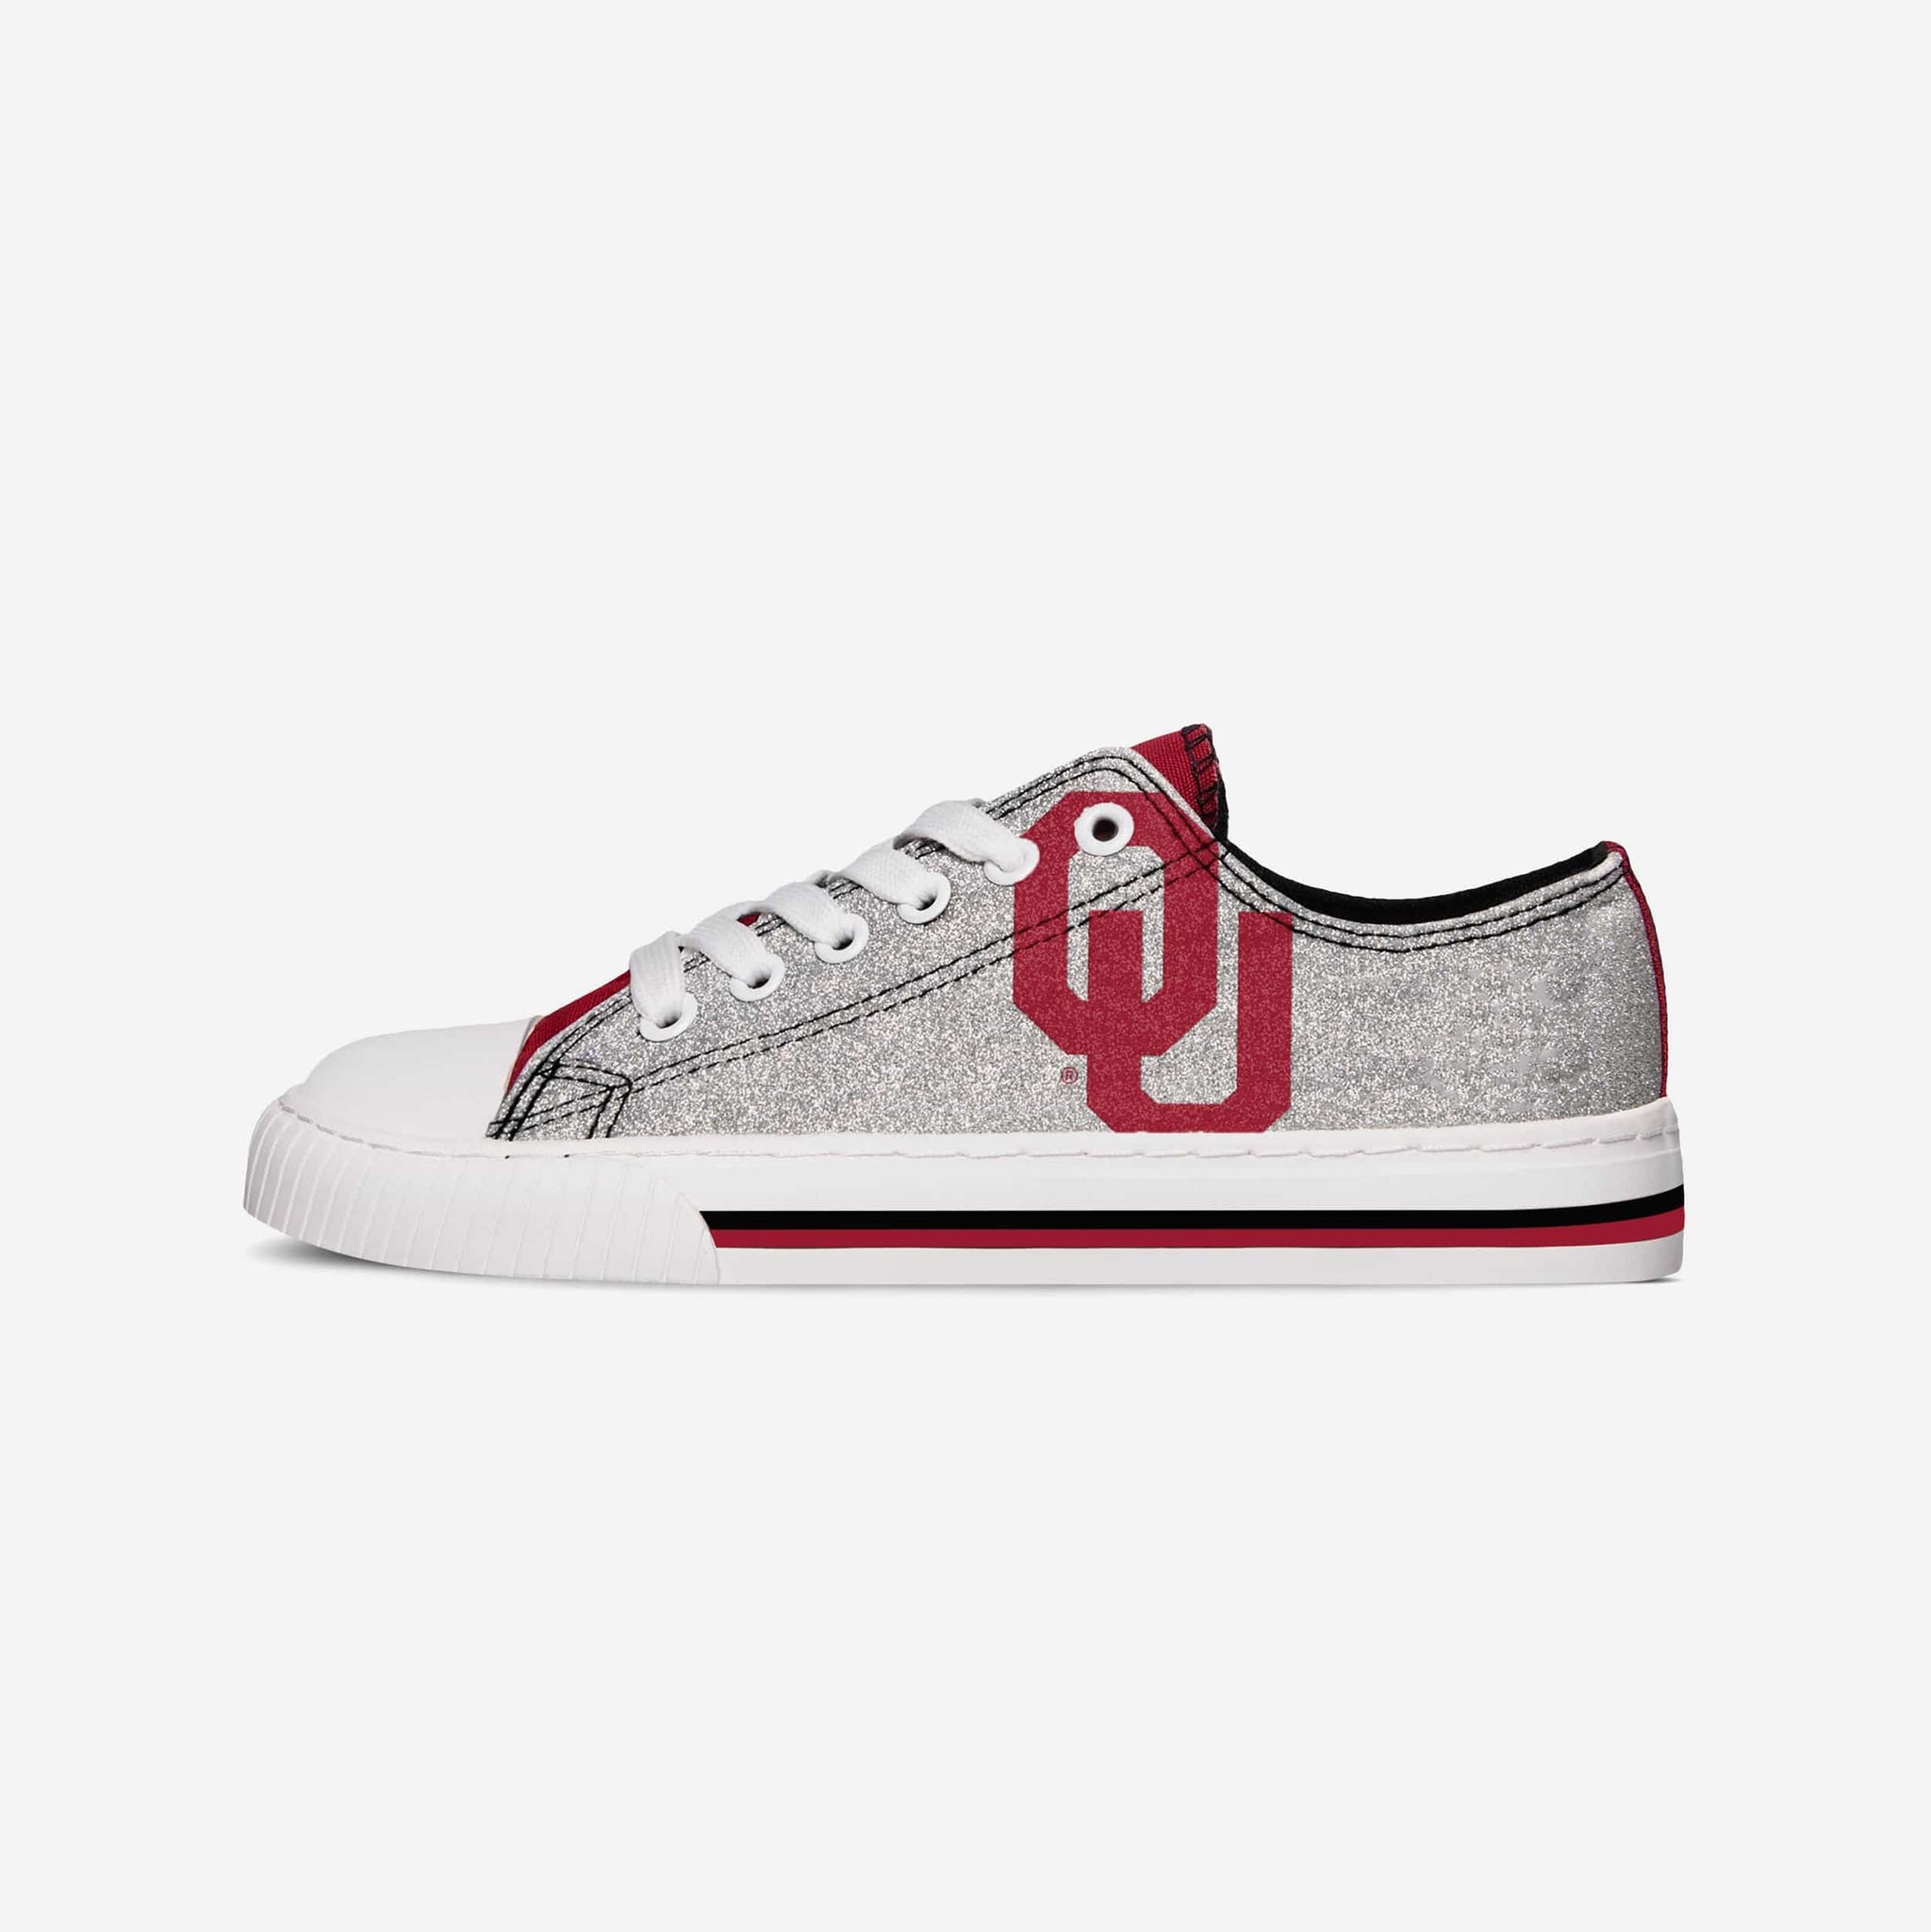 NCAA Louisville Cardinals New Trending Max Soul Sneaker Running Sport Shoes  Men And Women Gift